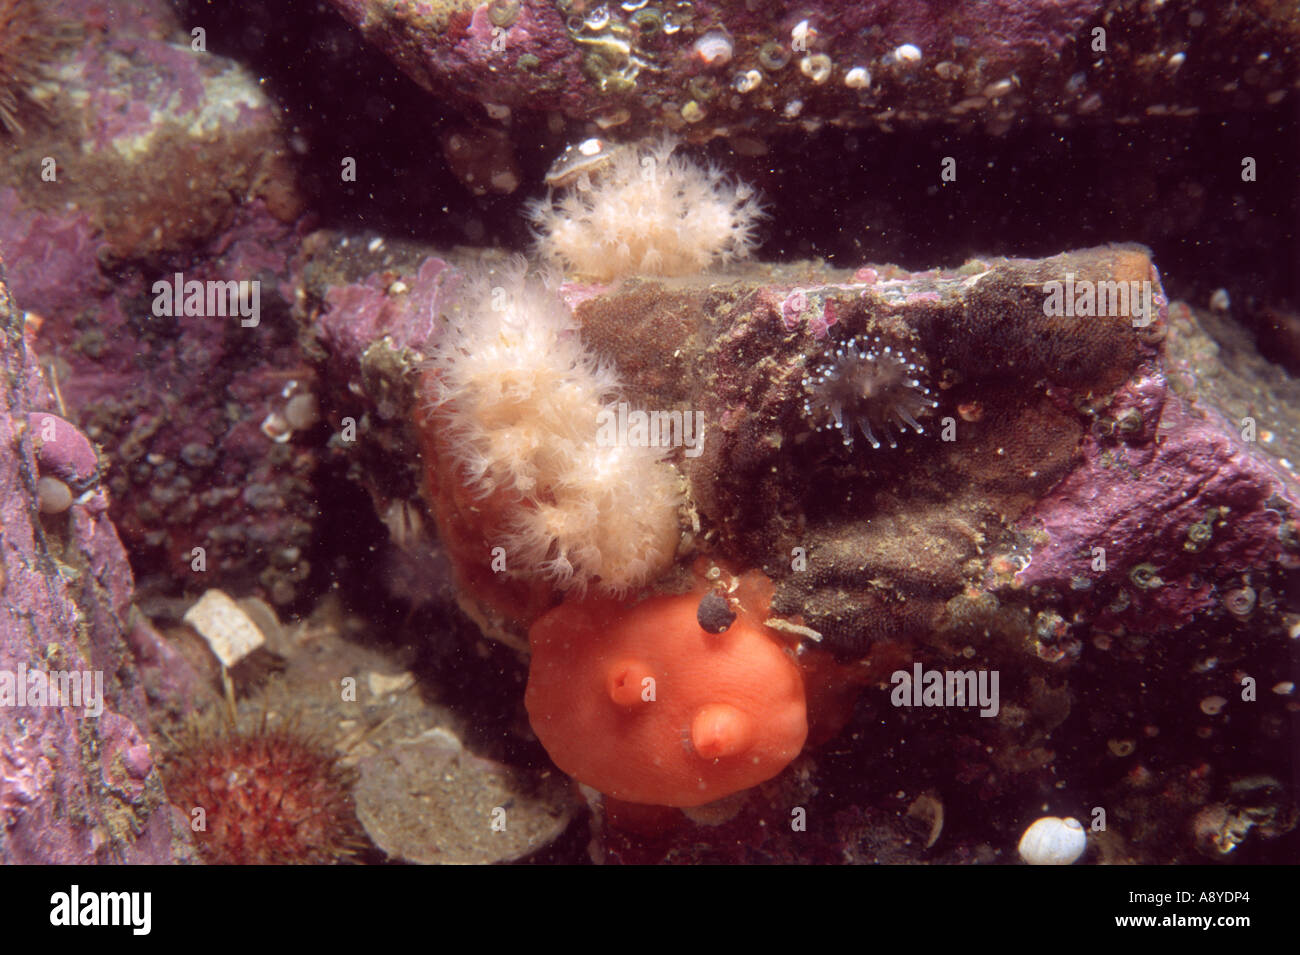 Marine invertebrates: red solitary ascidian Styela coriacea, white colony of alcyonaria Gersemia rubiformis. Pacific, Underwater Stock Photo